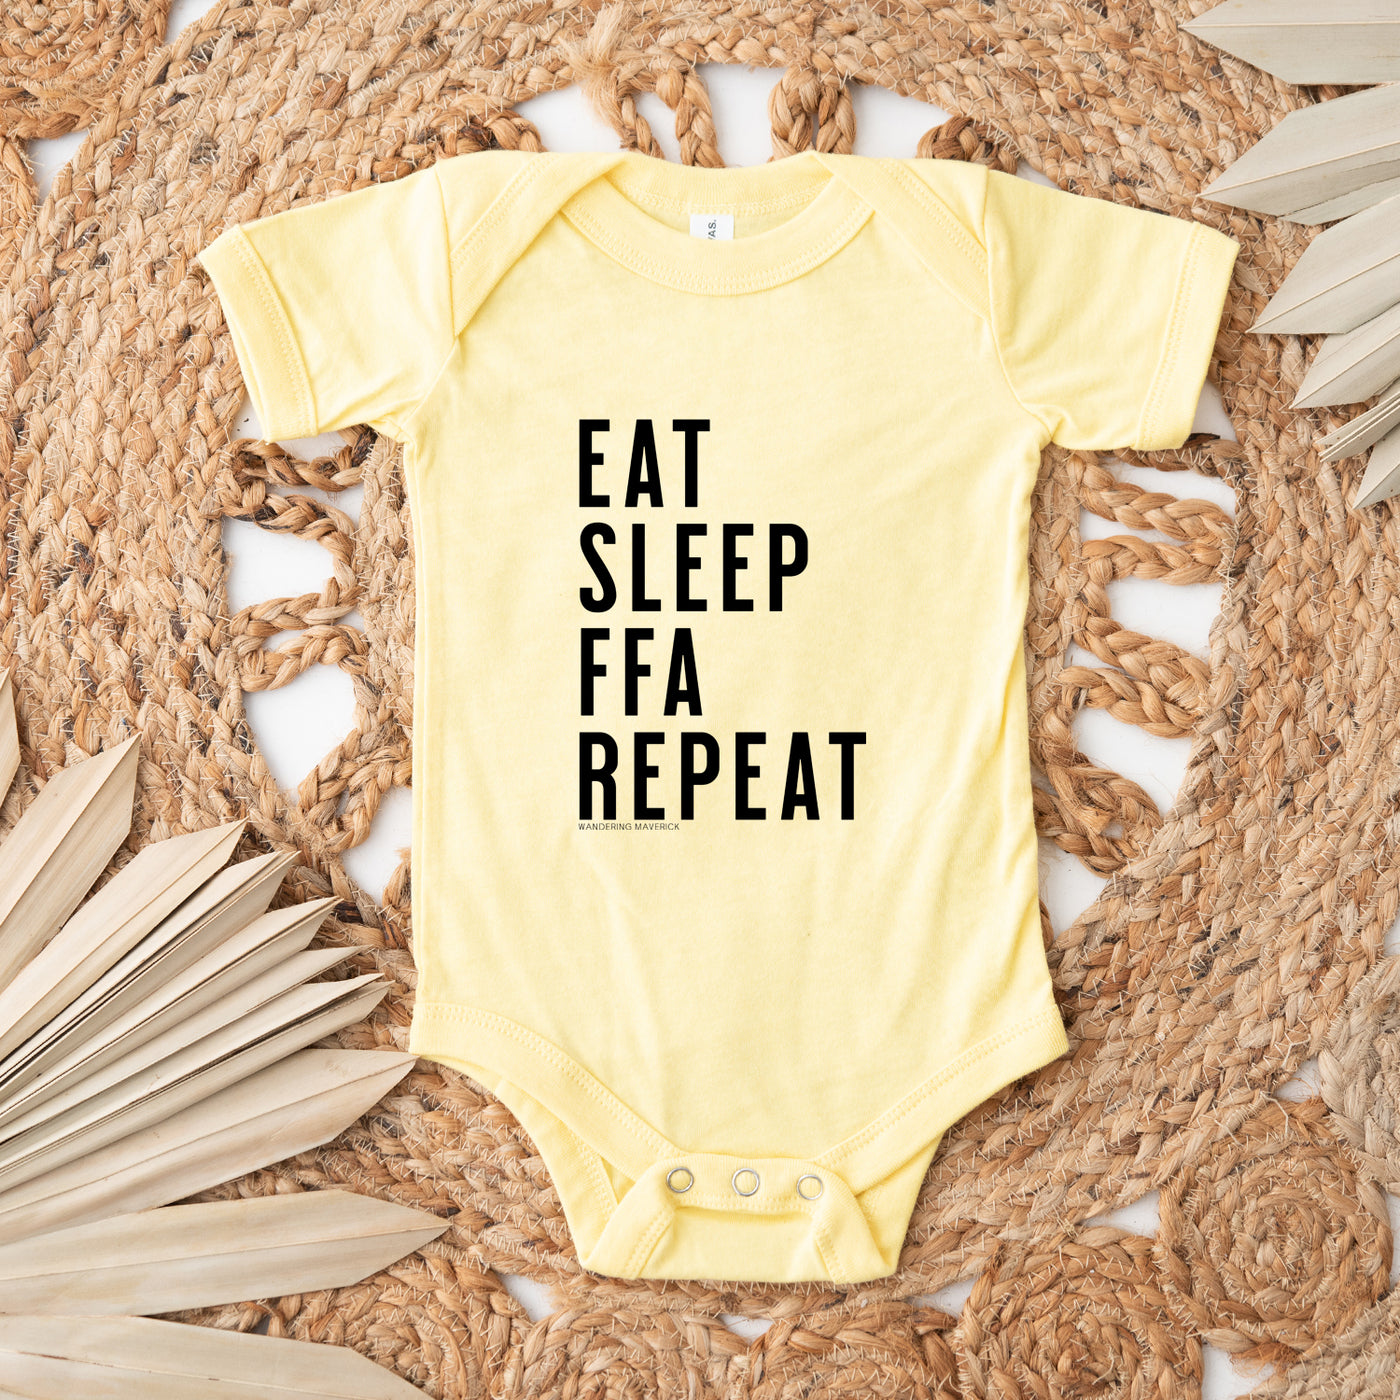 Eat Sleep FFA Repeat One Piece/T-Shirt (Newborn - Youth XL) - Multiple Colors!